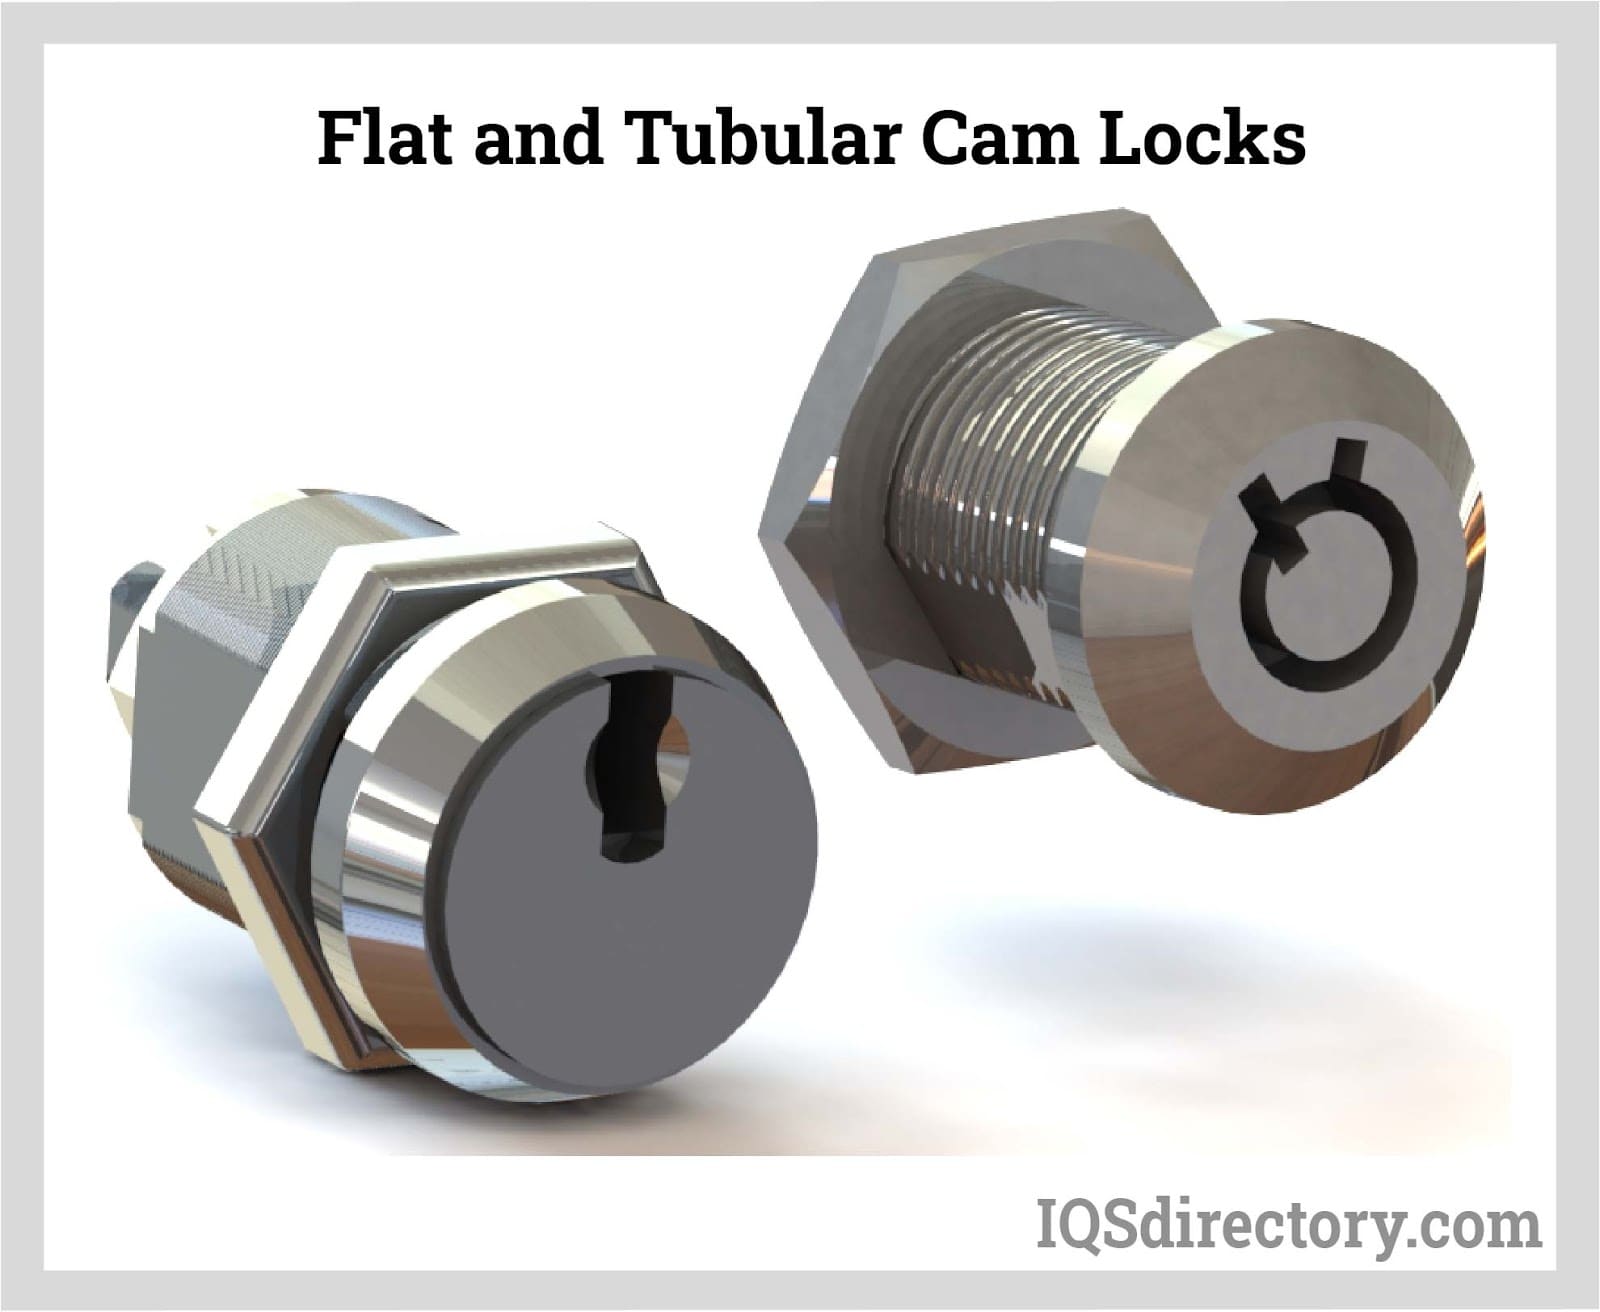 Flat and Tubular Cam Locks